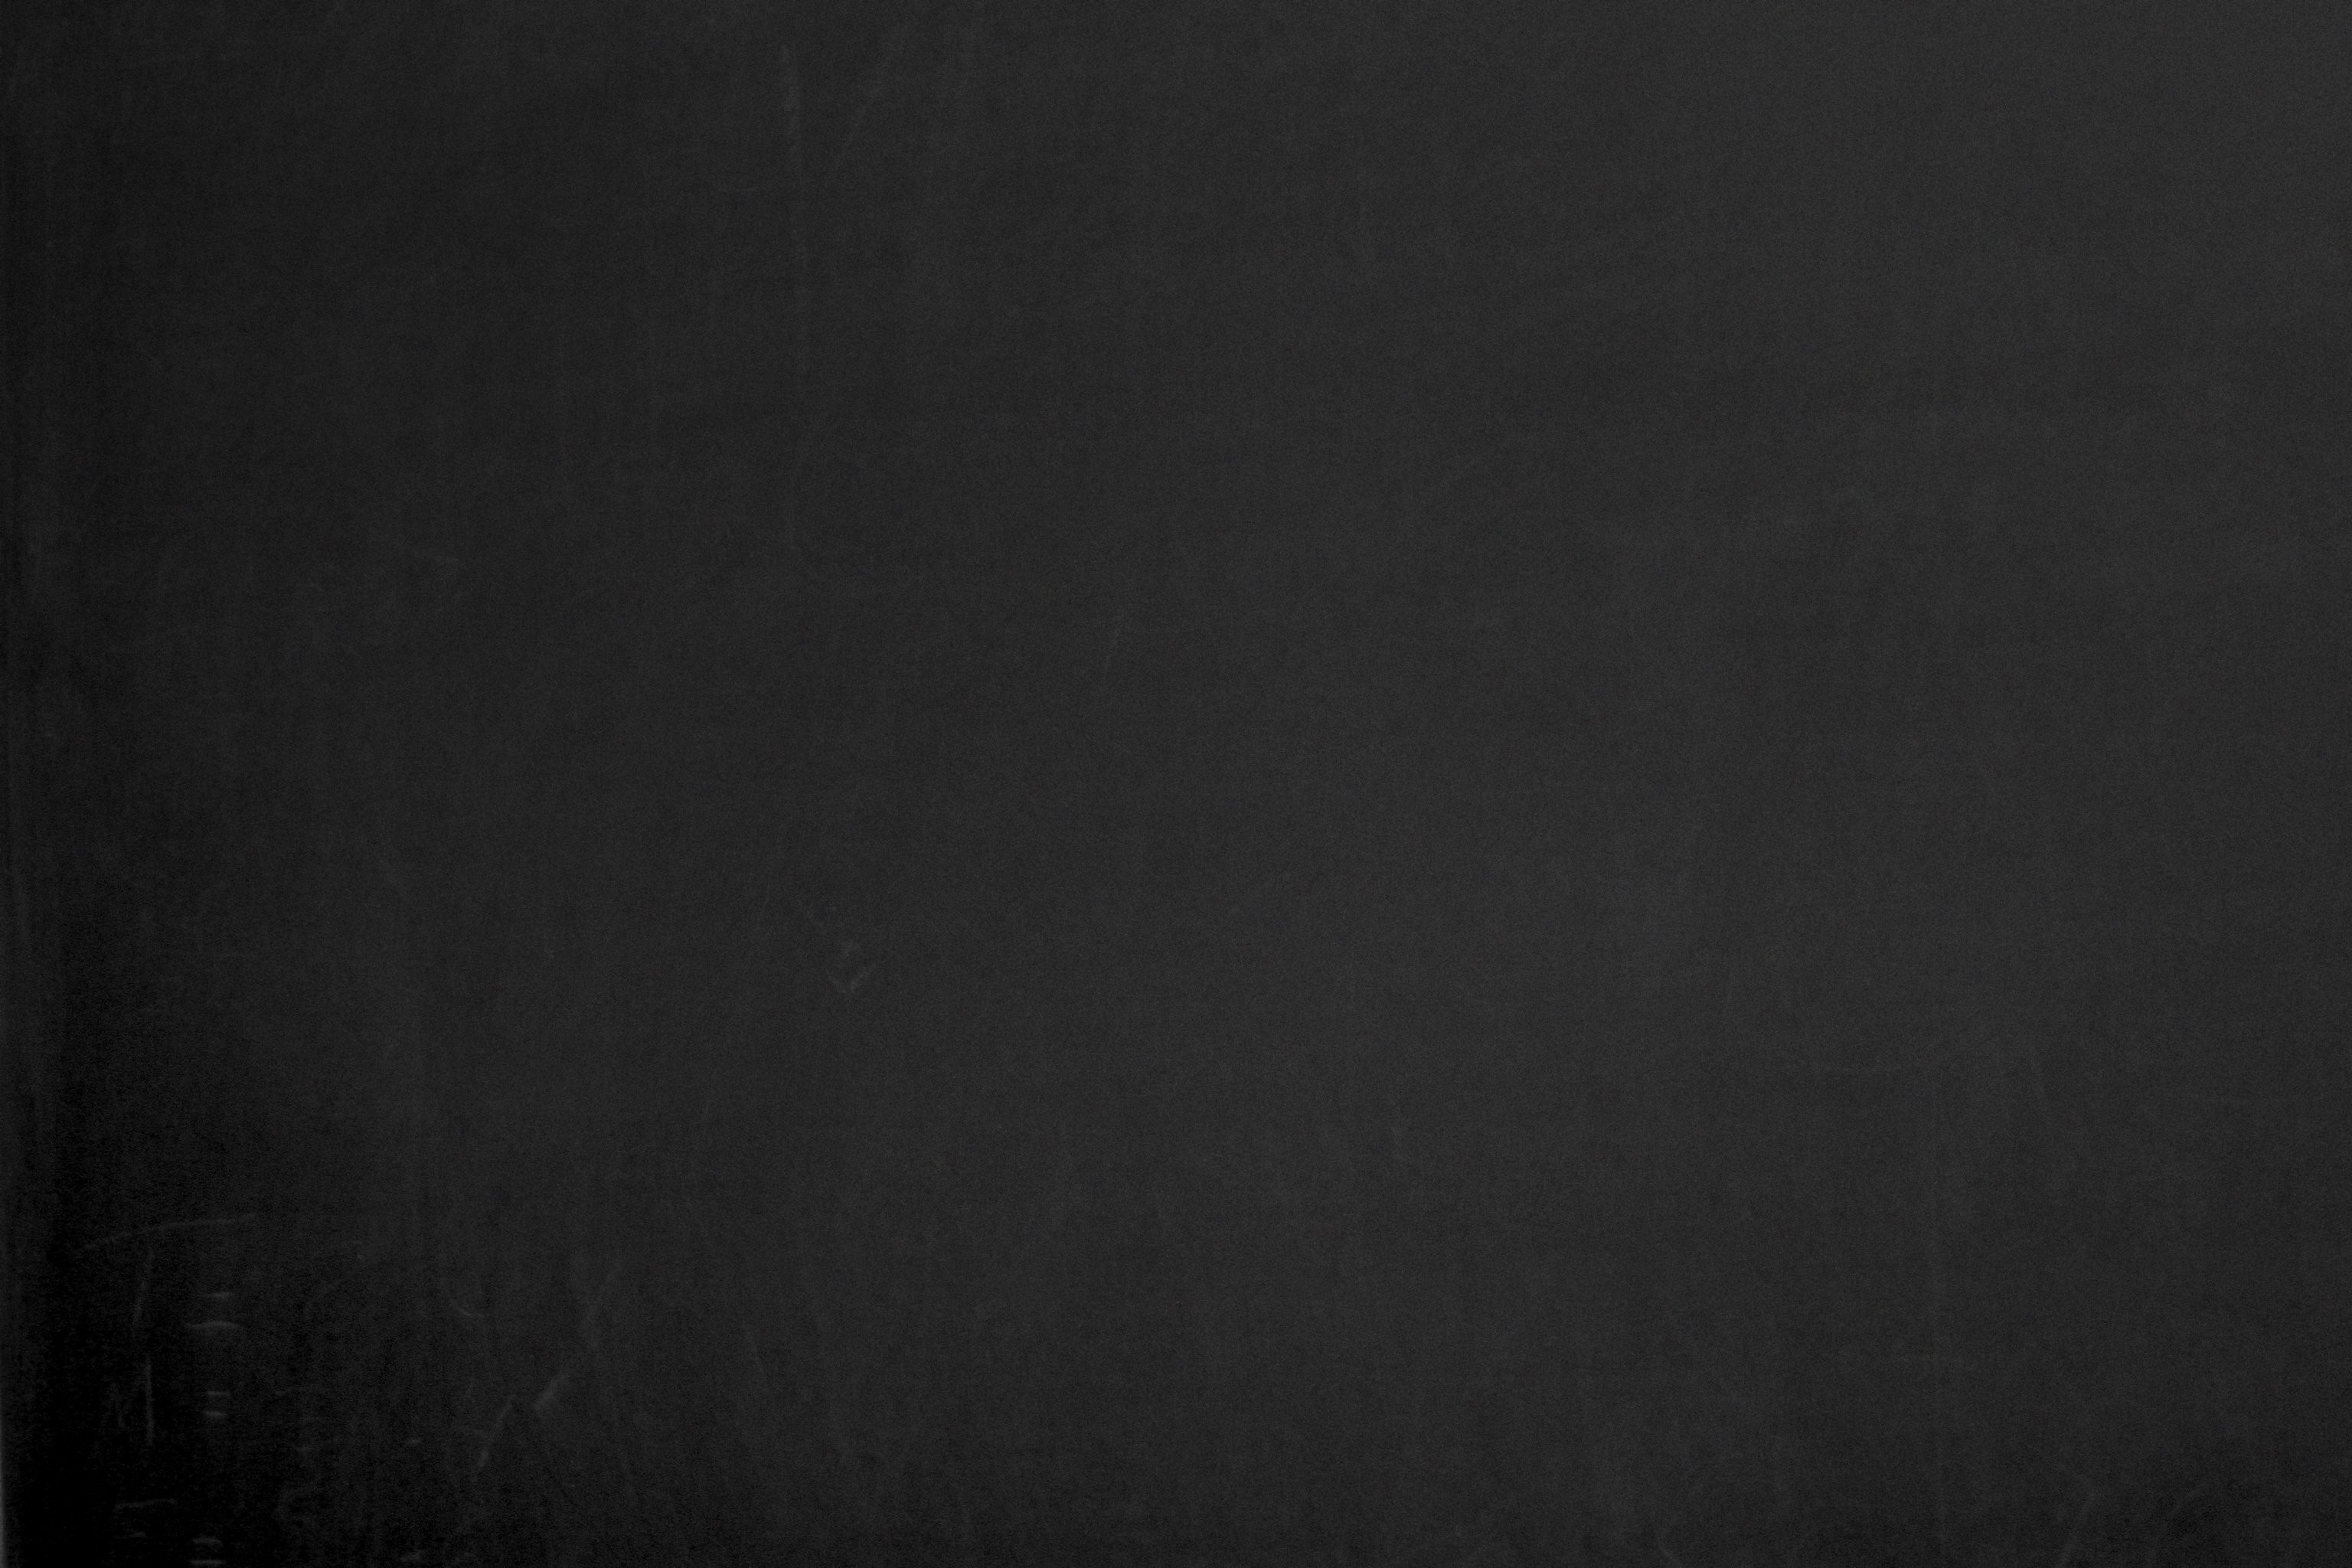 Chalkboard Wallpaper 41 Images HD Wallpapers Download Free Images Wallpaper [wallpaper981.blogspot.com]